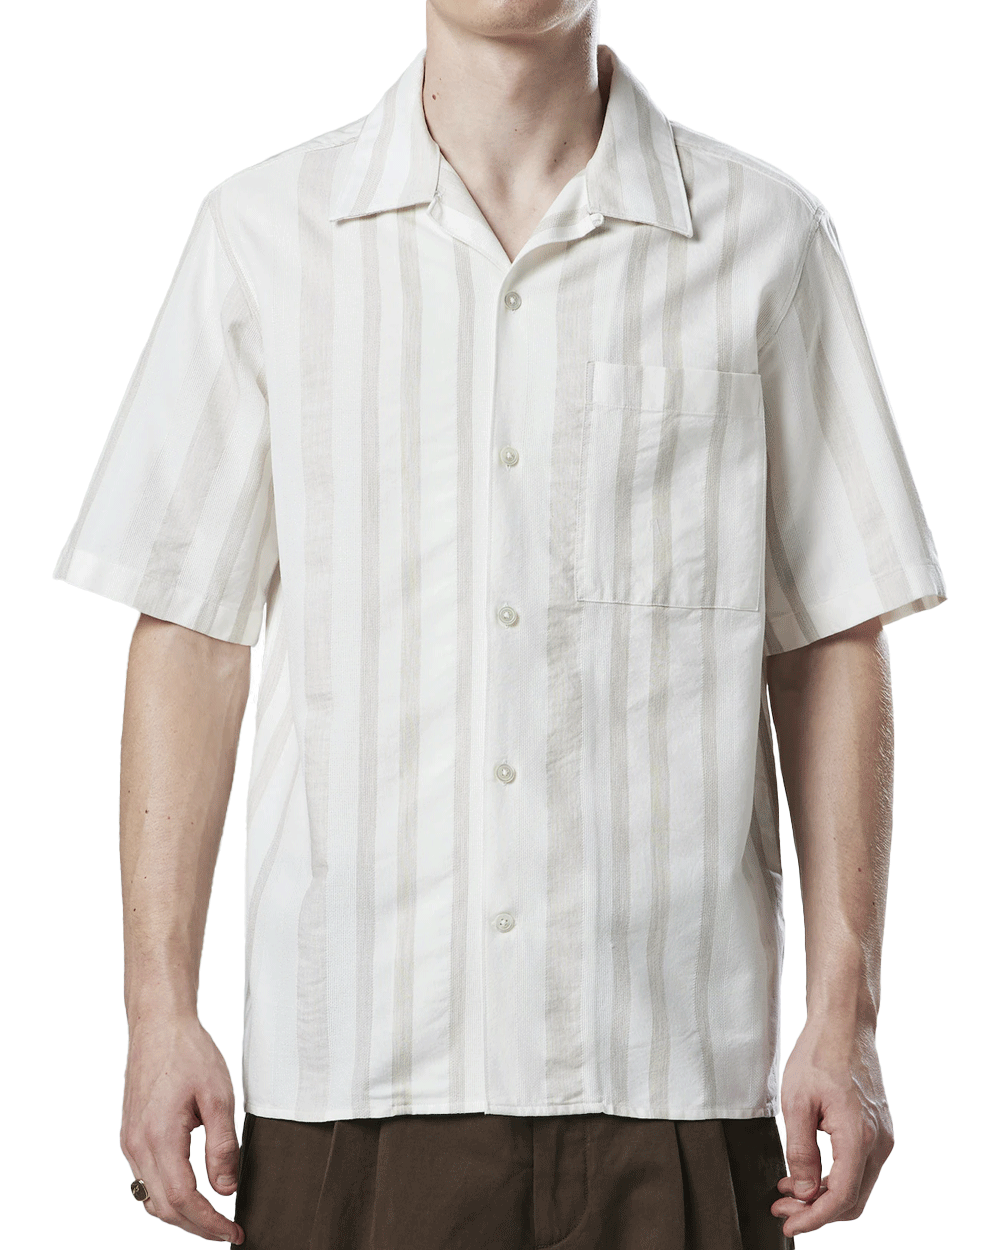 Khaki Julio Striped Short Sleeve Shirt